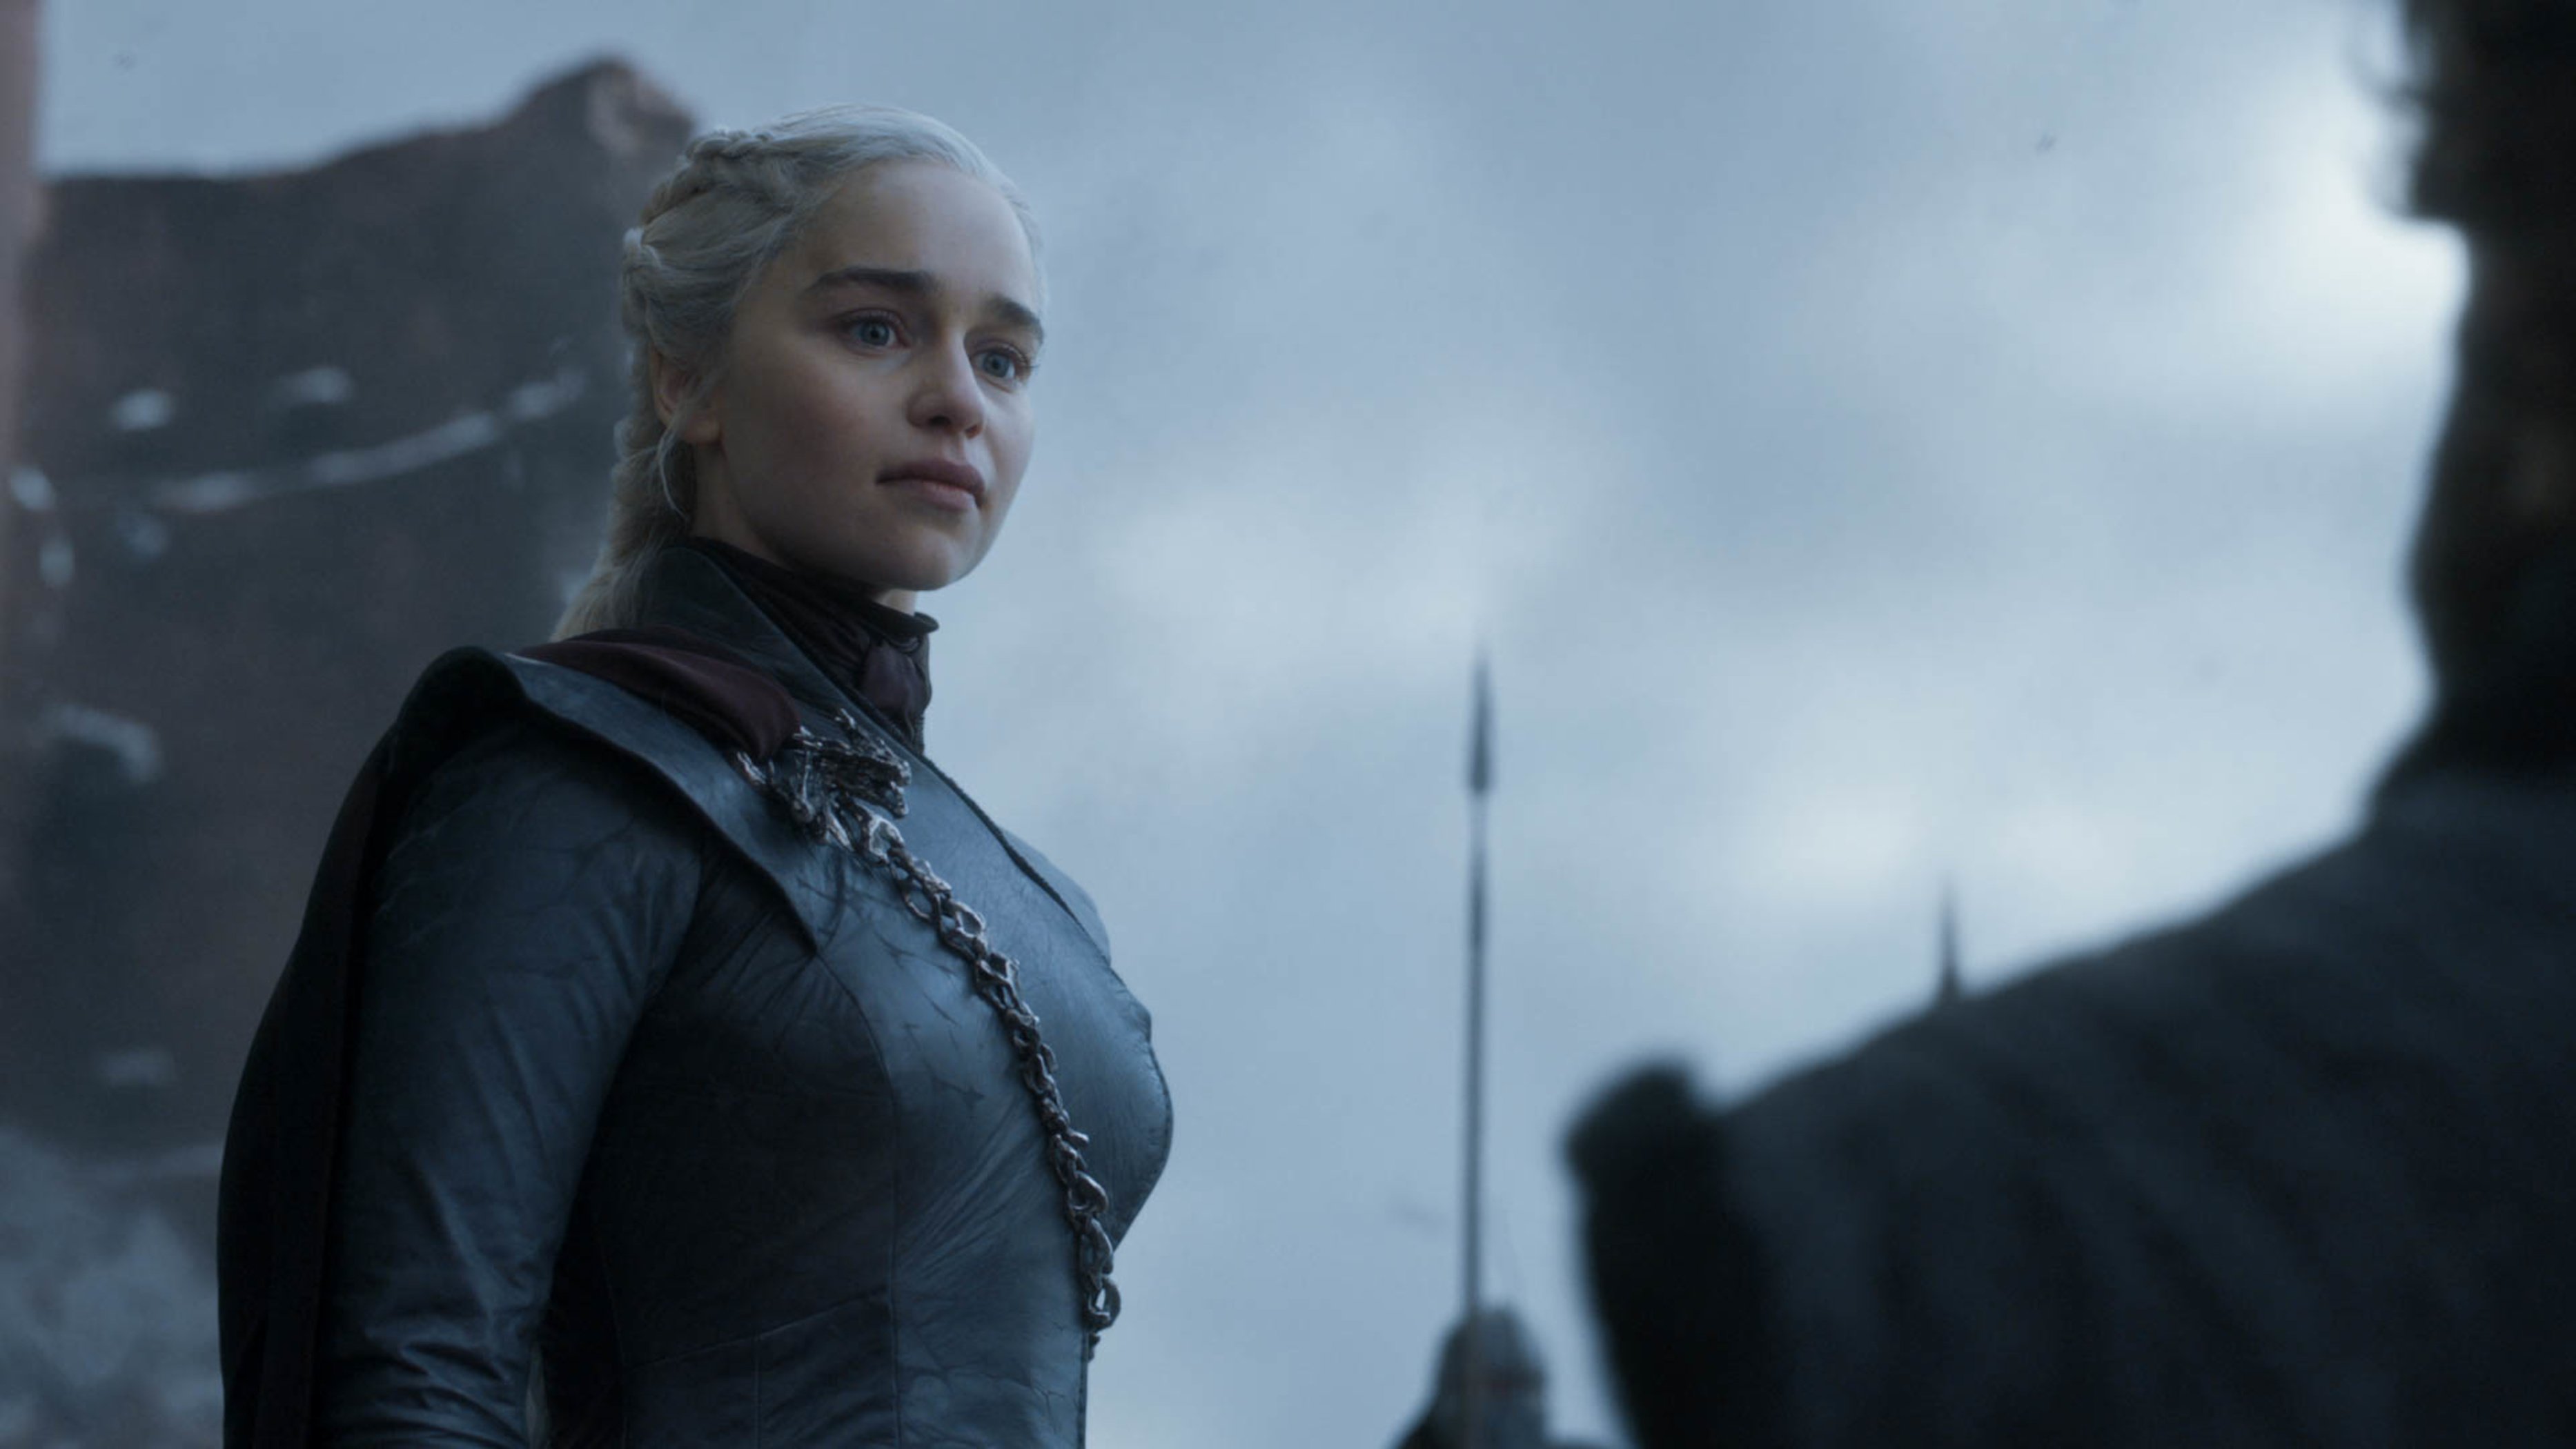 Daenerys Targaryen (Emilia Clarke) after her rousing speech in the series finale of 'Game of Thrones.'